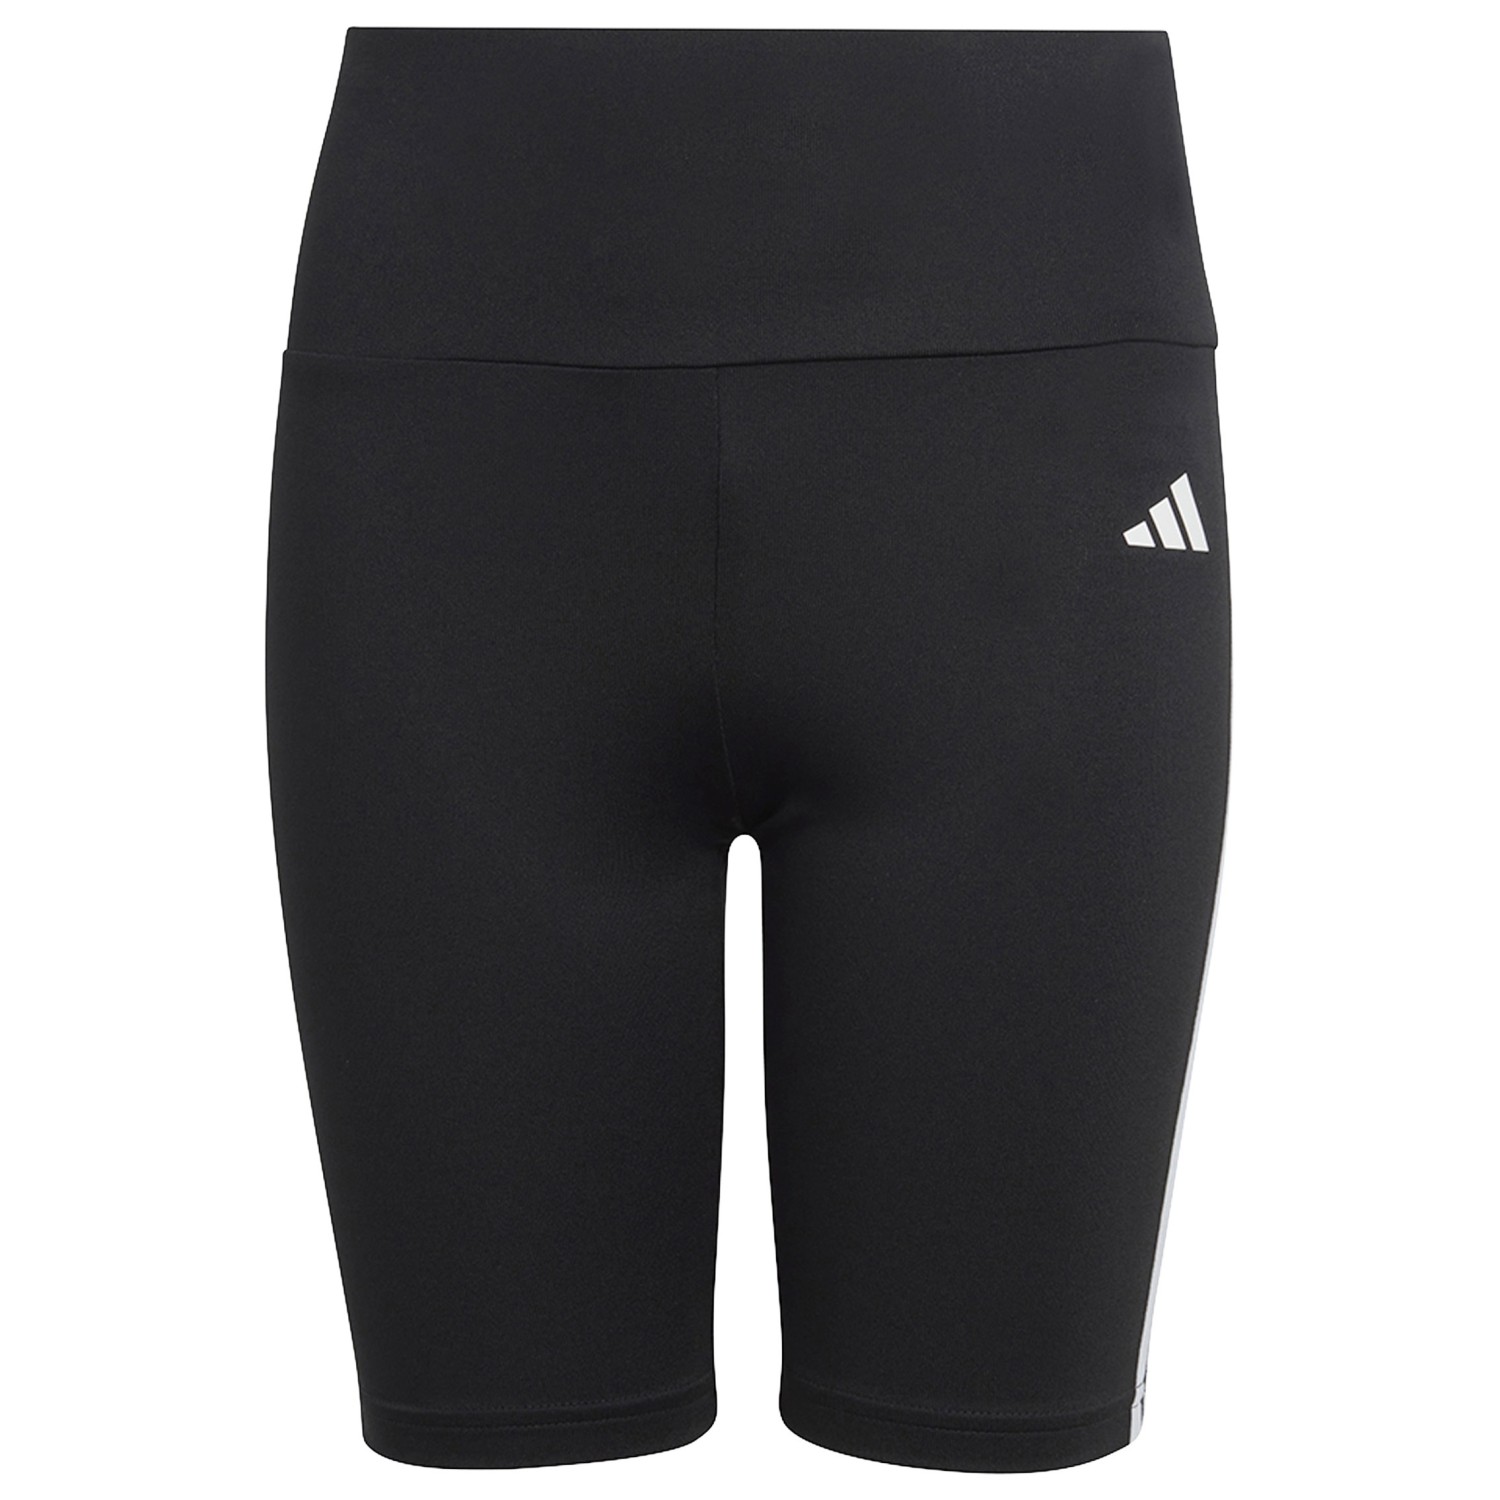 шорты adidas 4krft sports knitted training black черный Шорты Adidas Girl's Training Essentials 3S BK, цвет Black/White